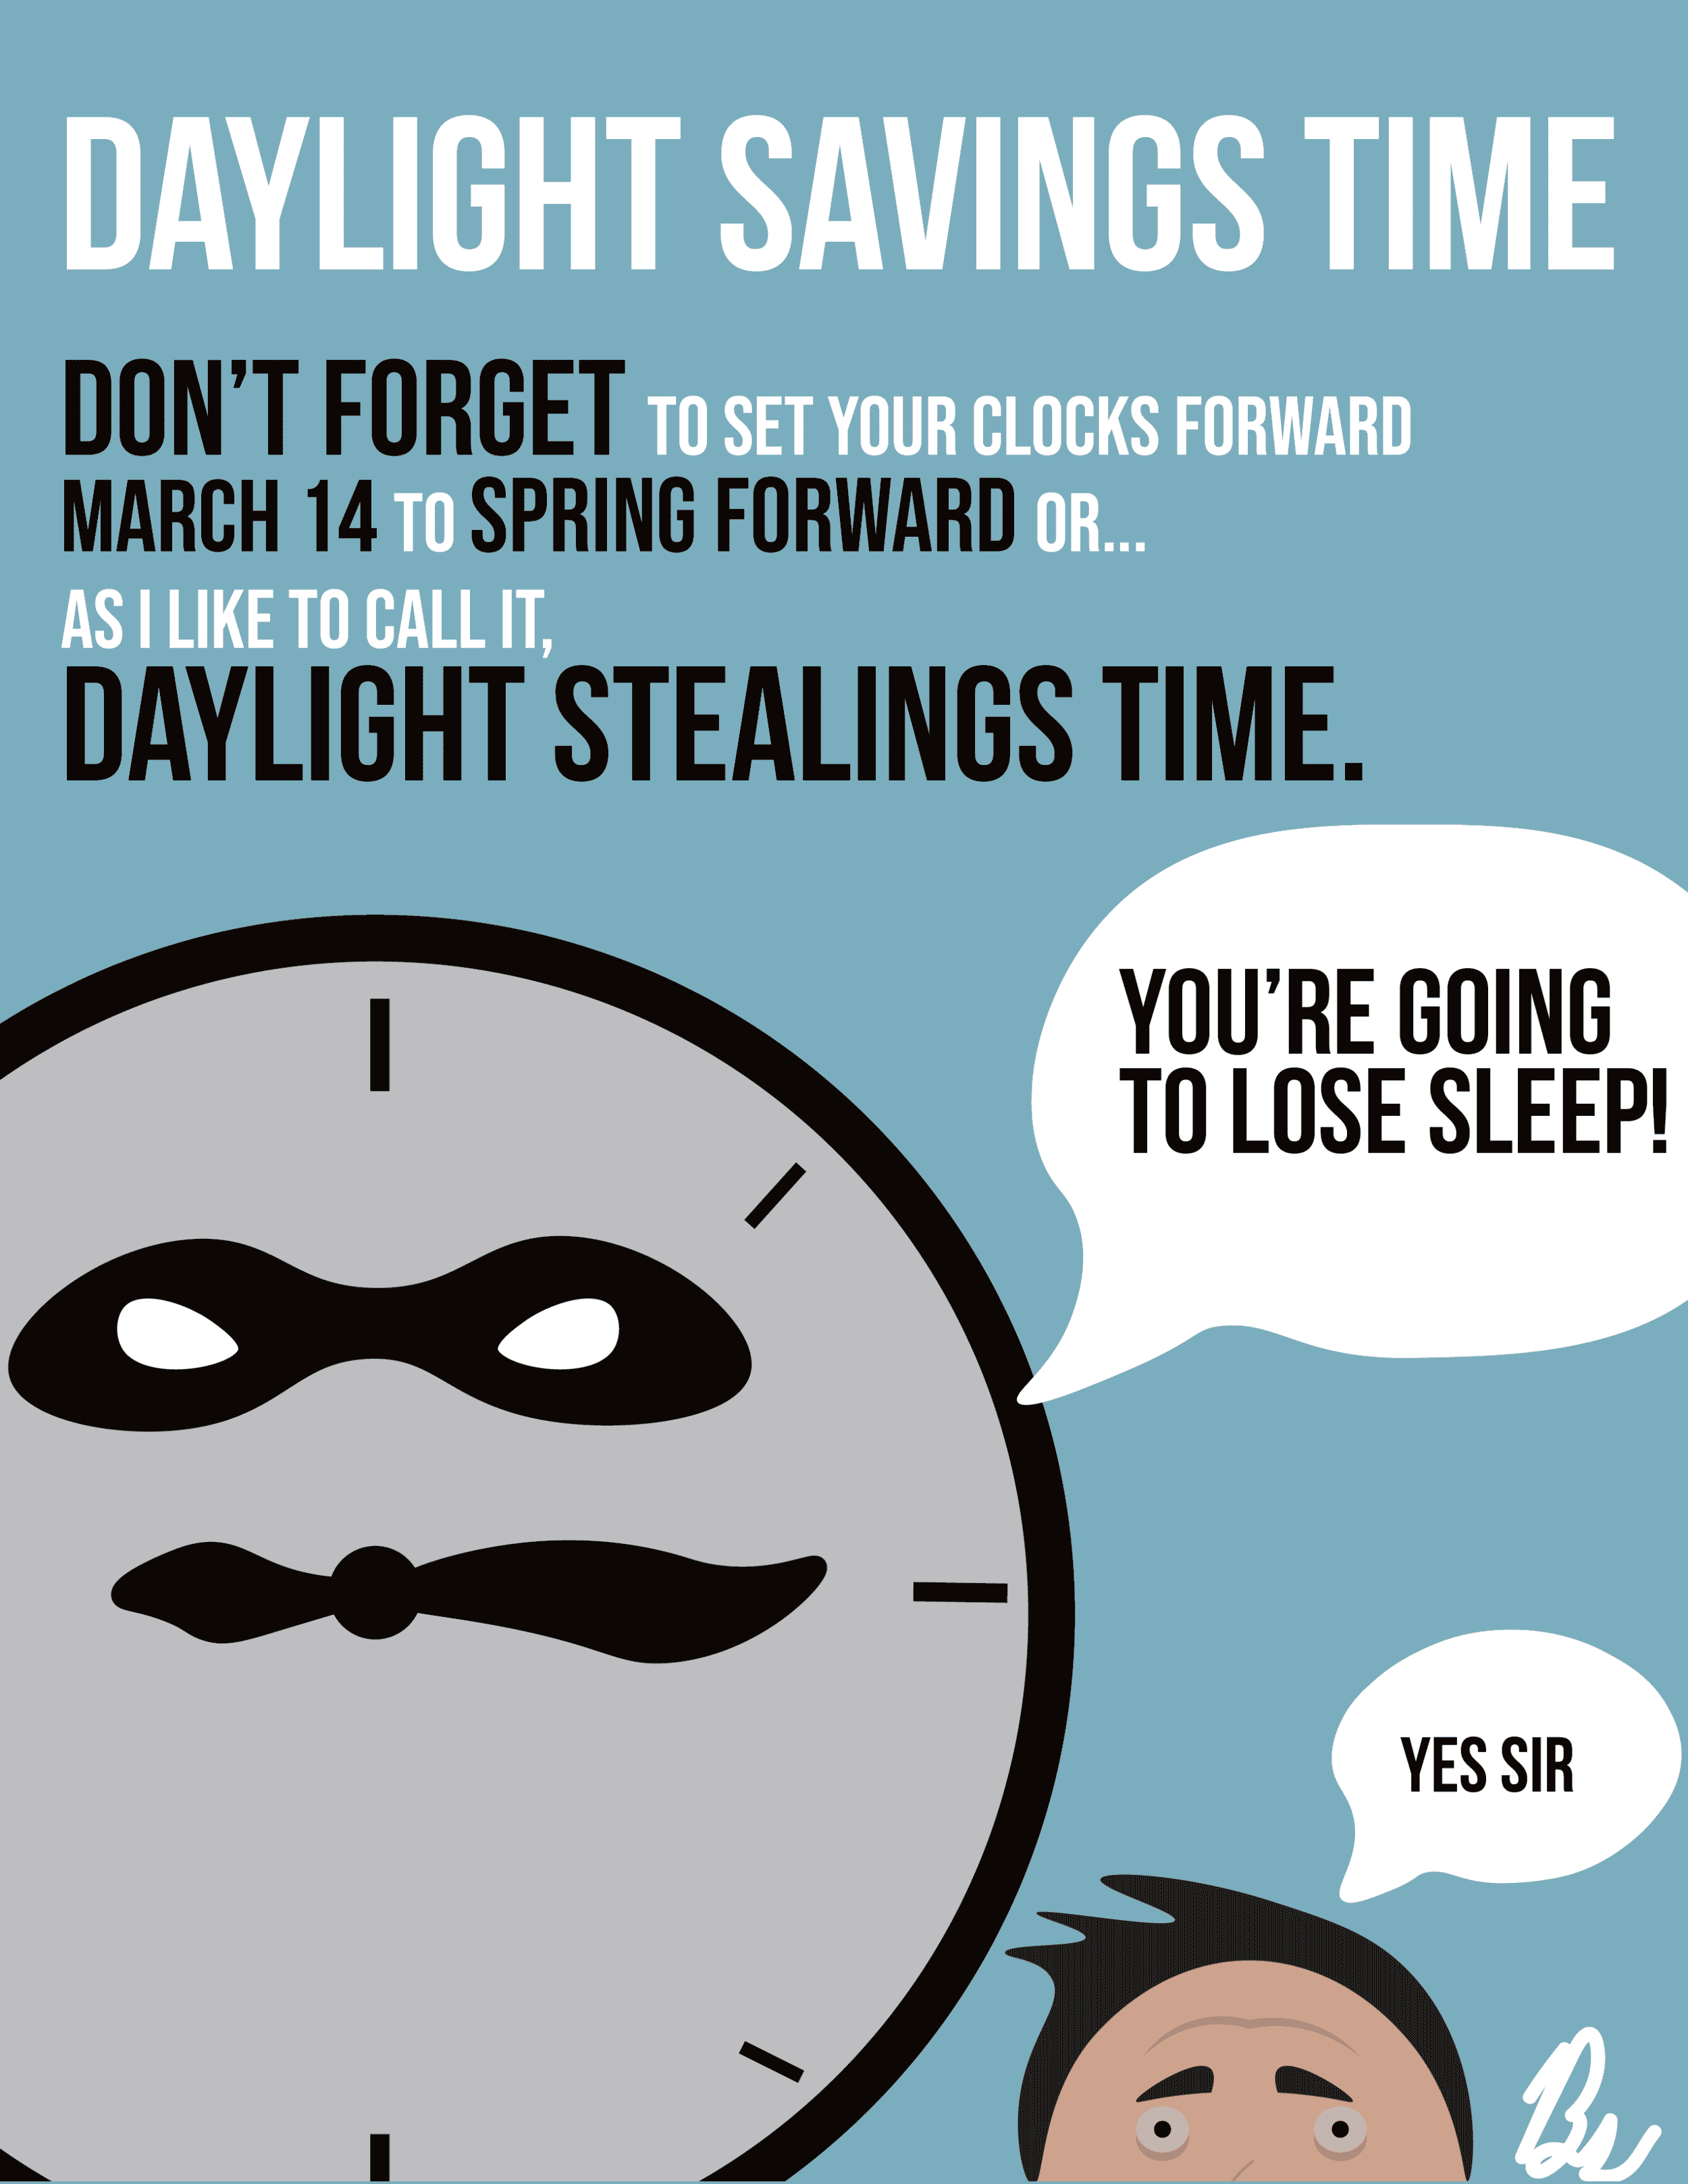 We observe Daylight Savings Day March 14.